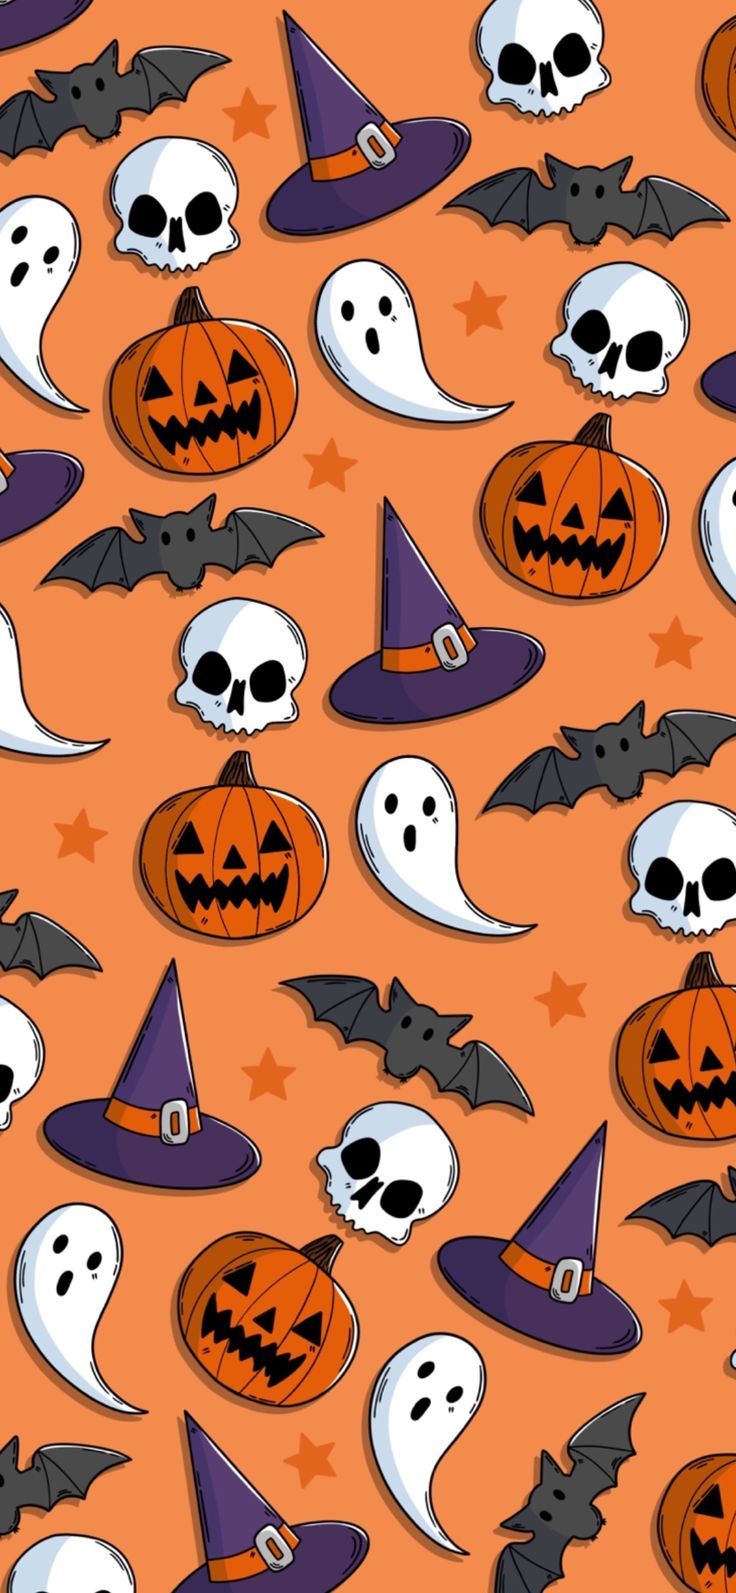 Halloween Spooky Ghost Pumpkin Bat Skull Illustration Phone Wallpaper Backg. Halloween wallpaper iphone, Halloween wallpaper background, Halloween wallpaper cute